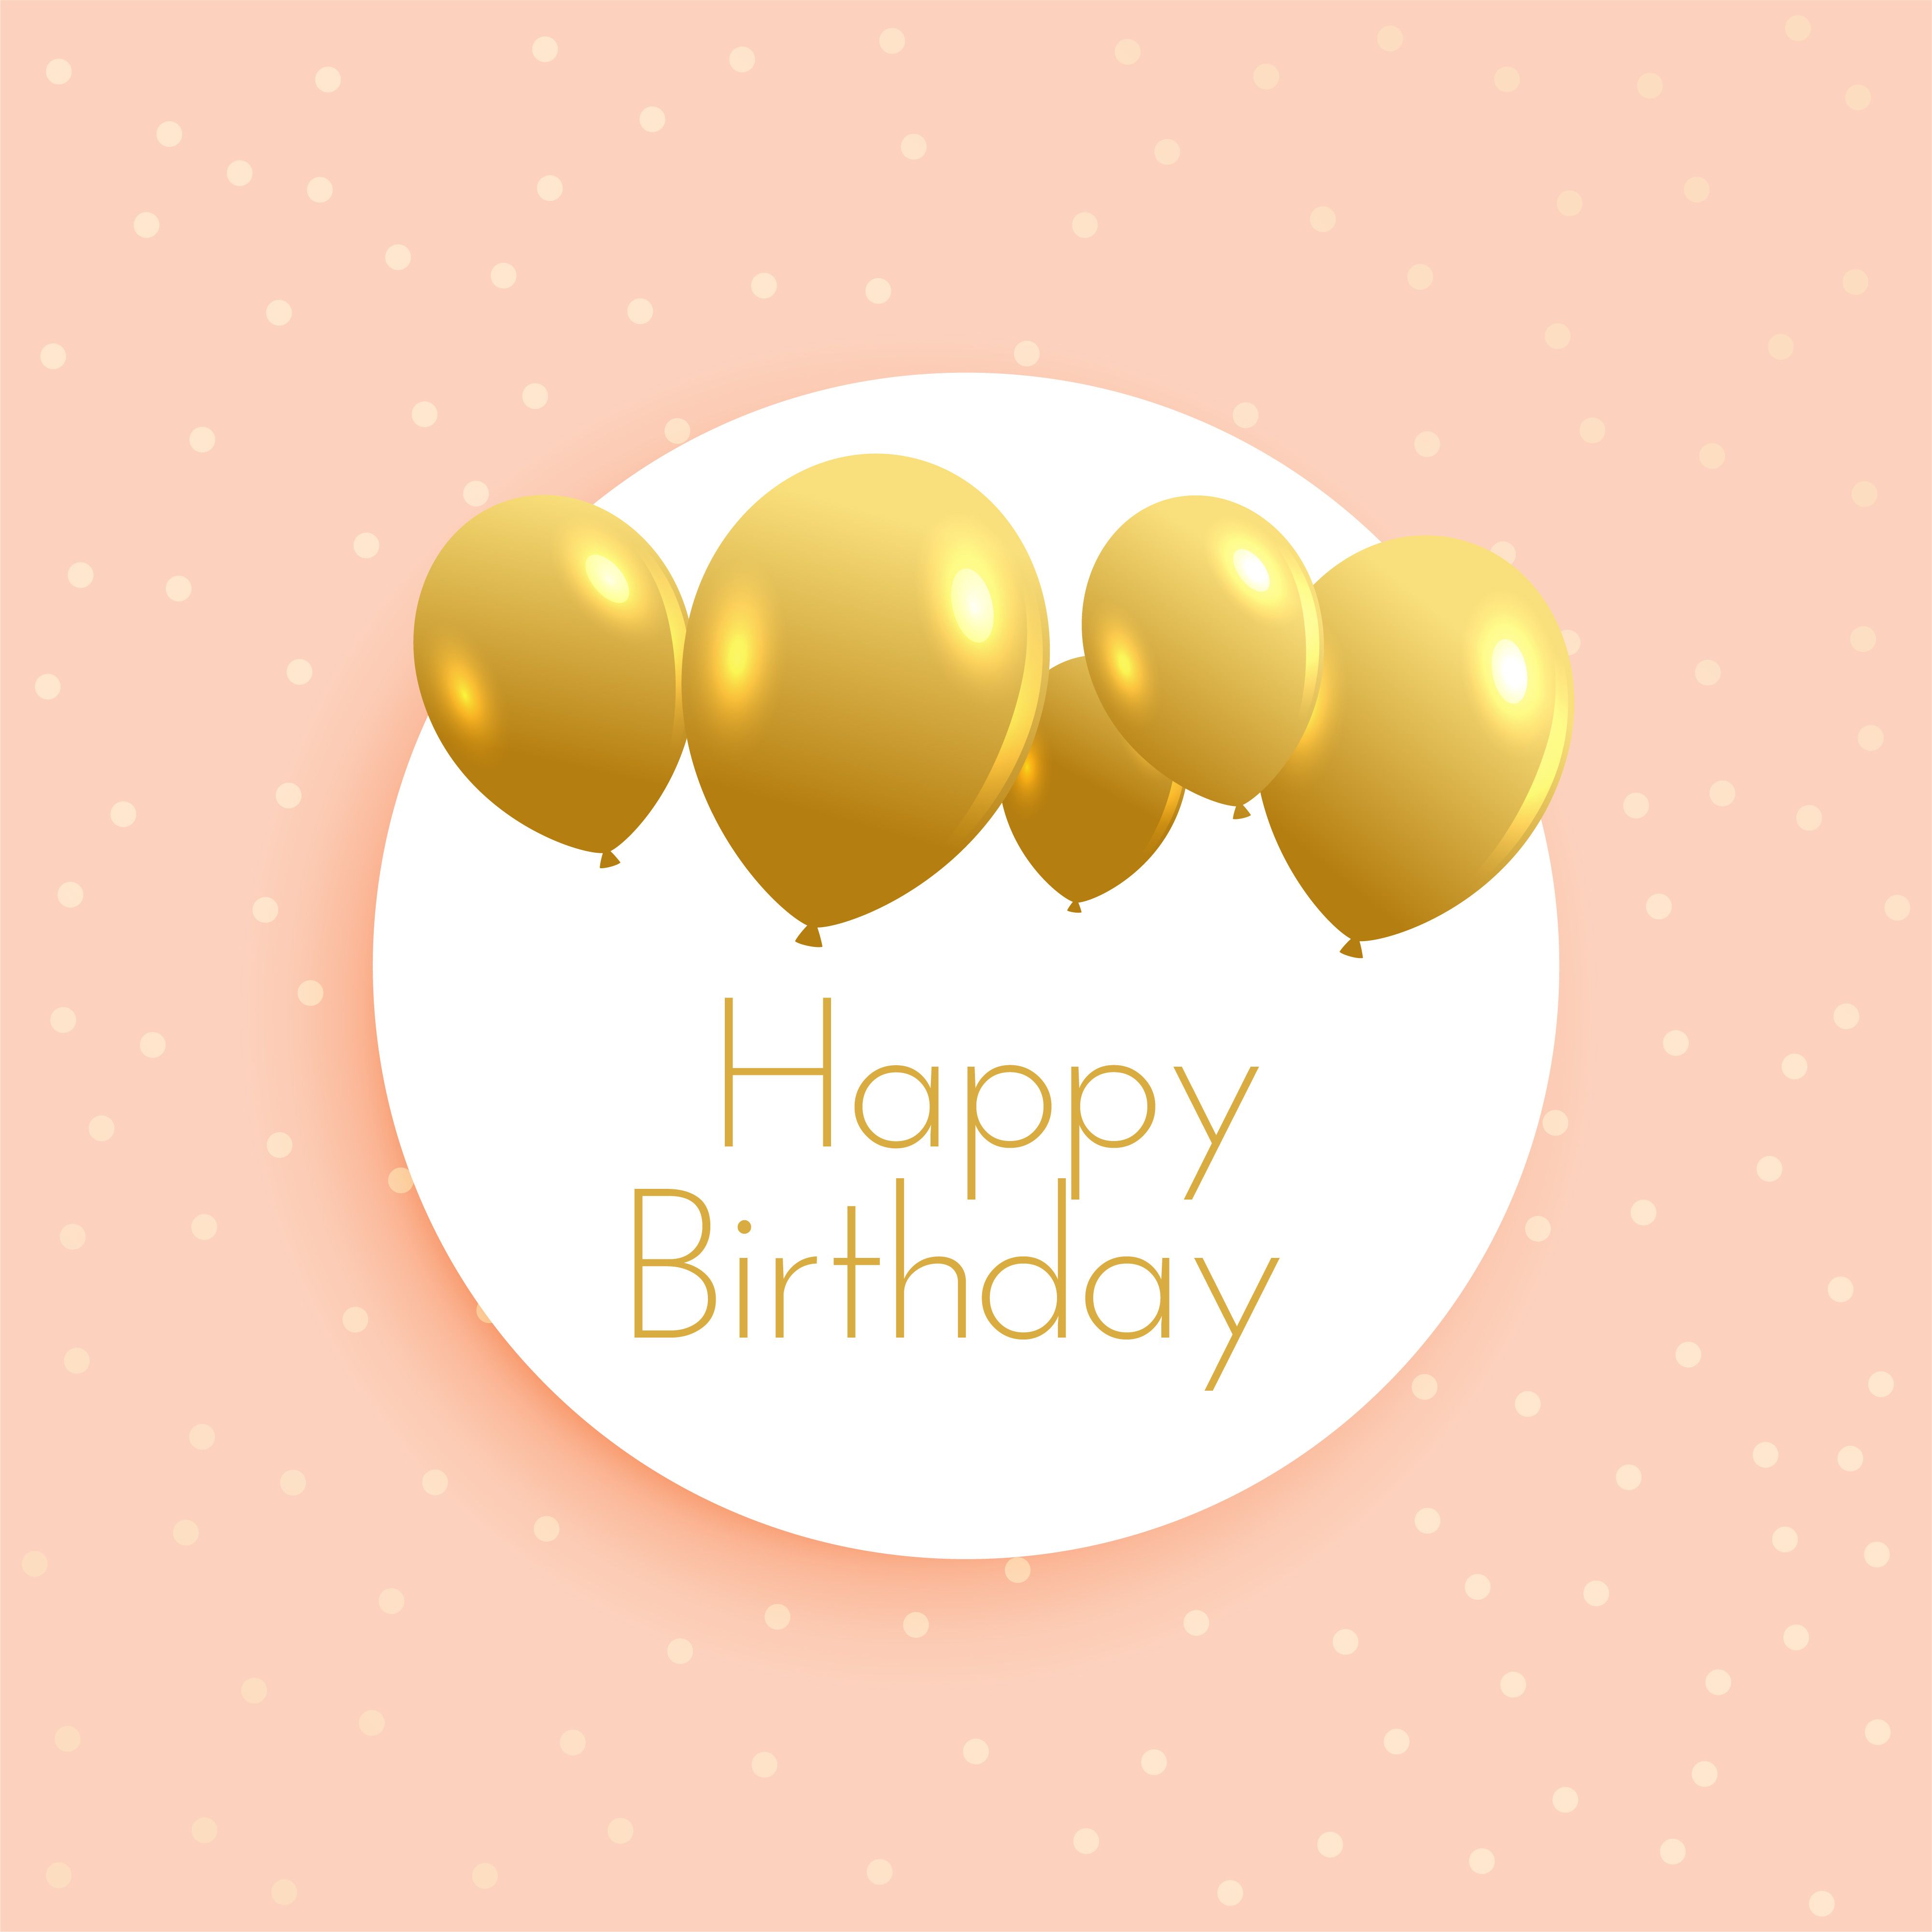 soft birthday background with golden balloons. Best happy birthday message, Birthday background, Happy birthday fun